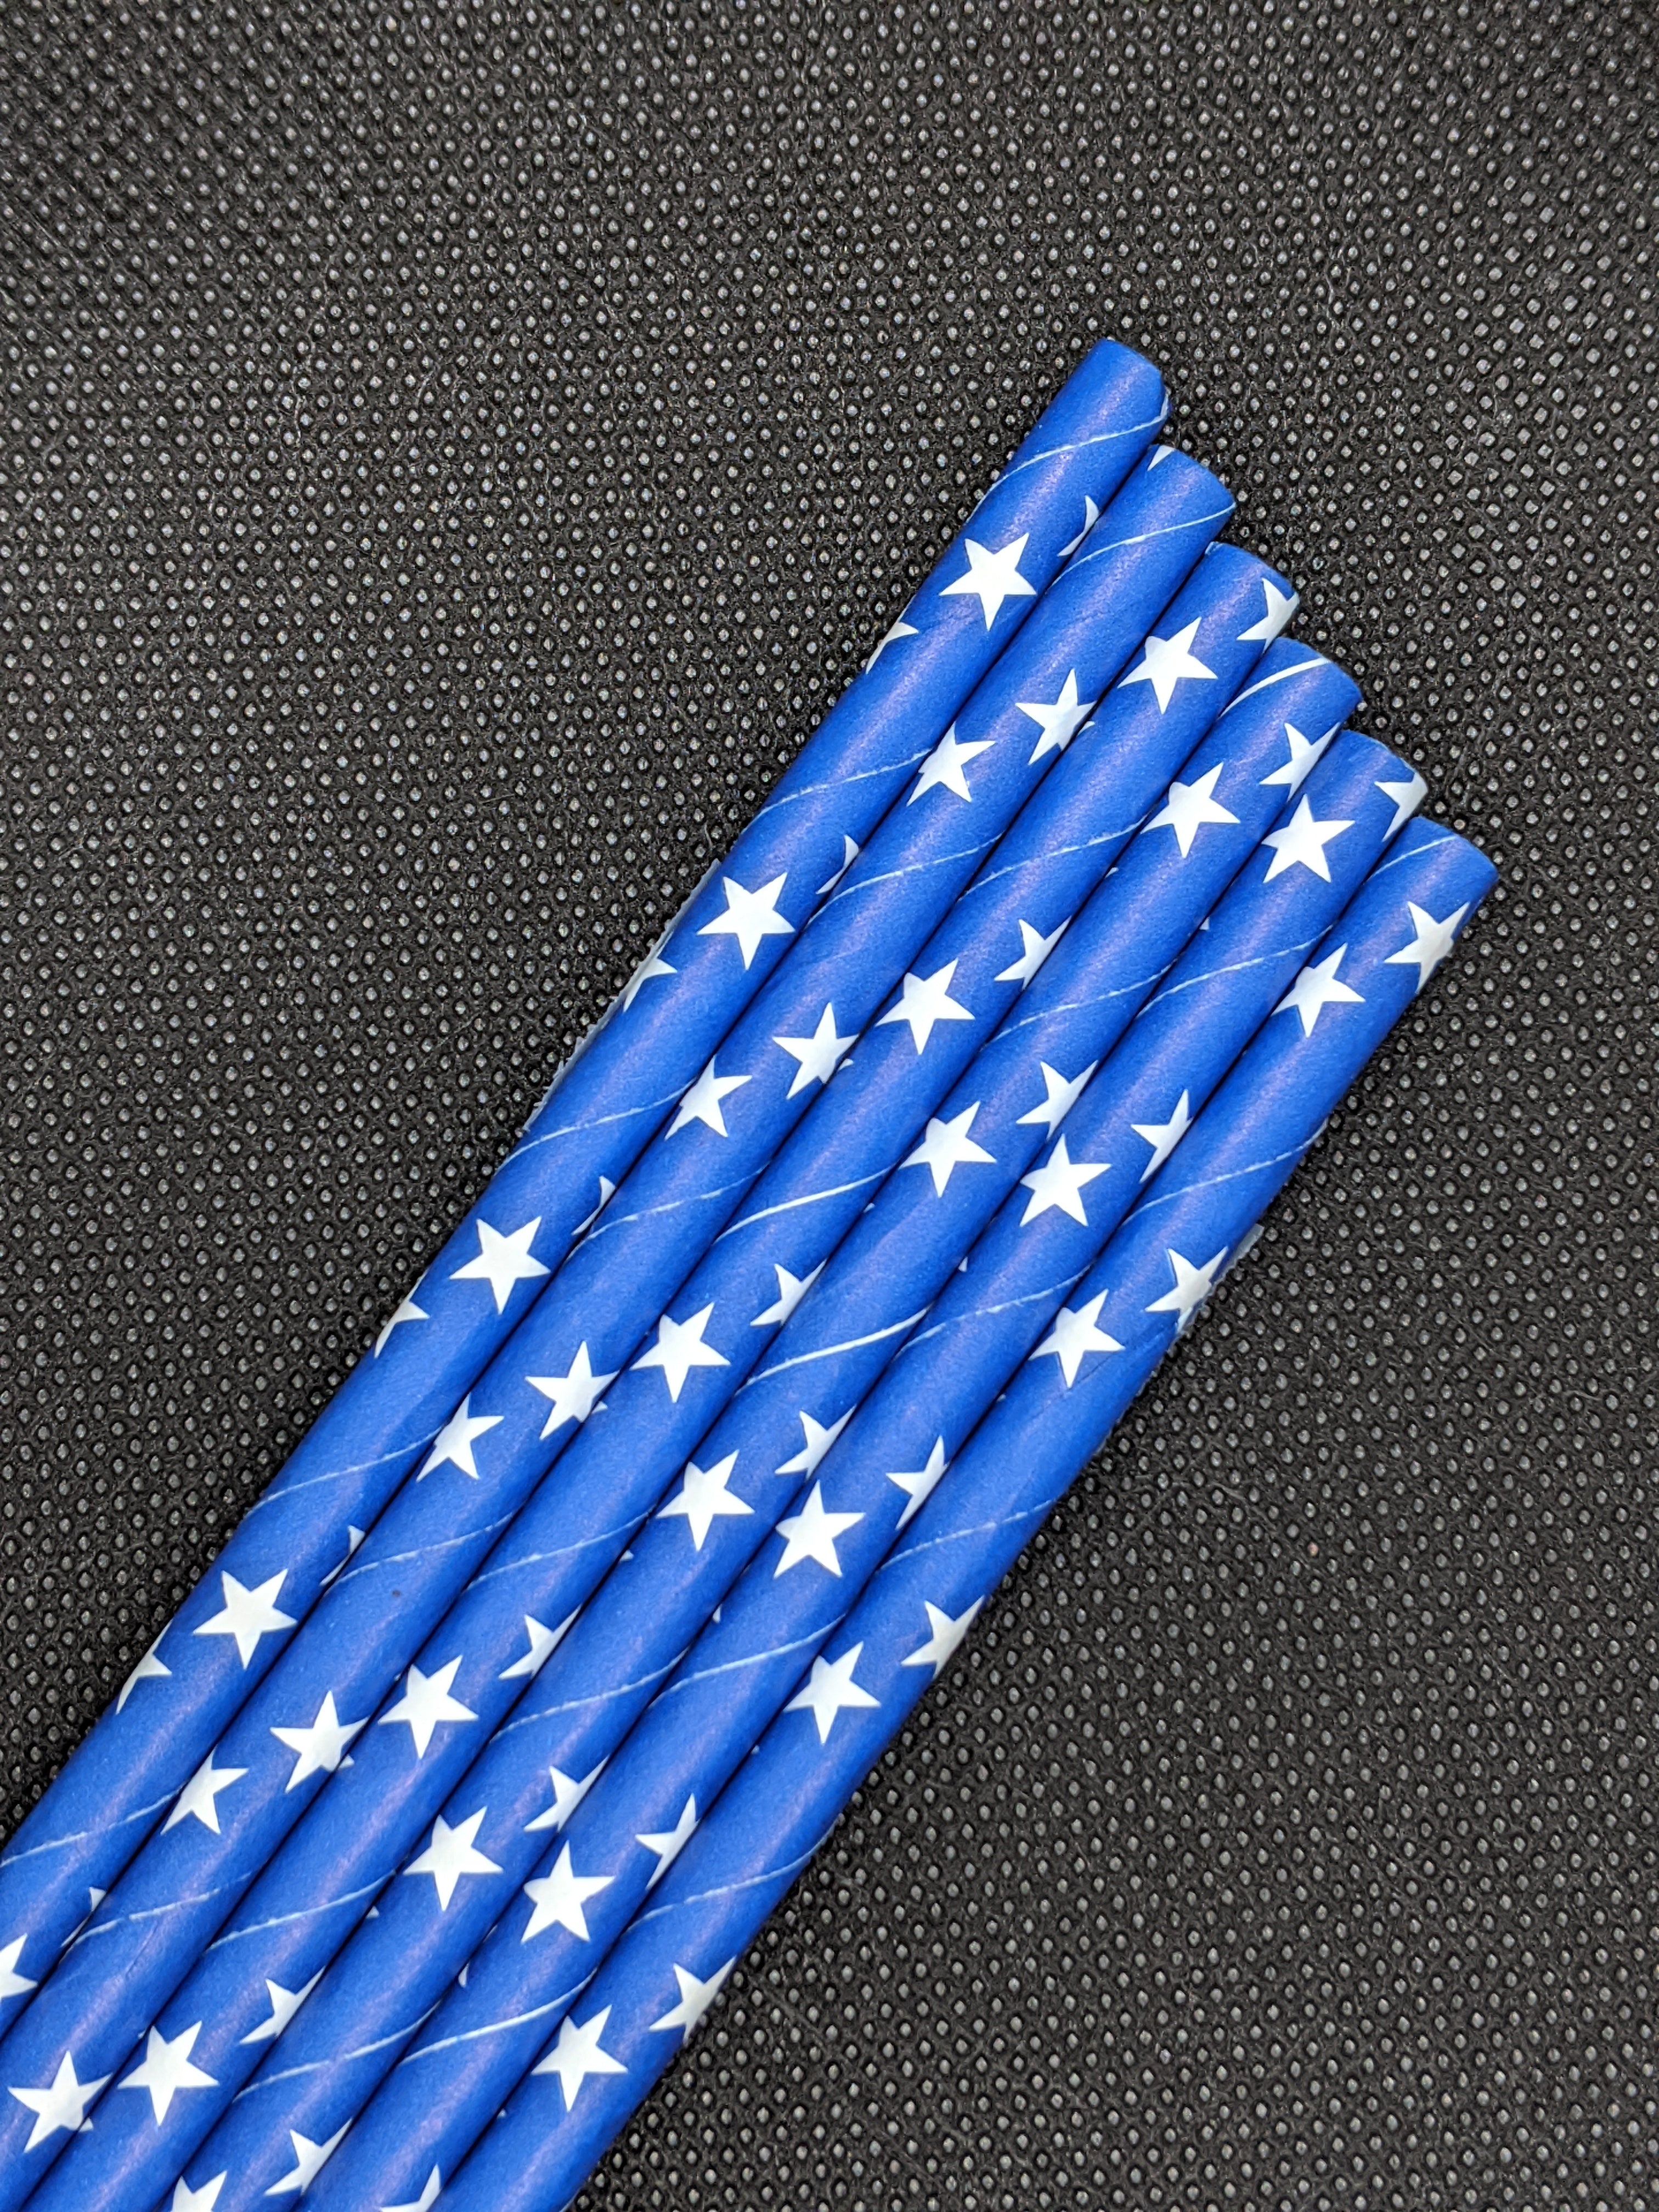 7.75" BLUE PAPER STRAWS - STAR DESIGN - 2400 CT (WRAPPED) - Orcas Ocean Straws